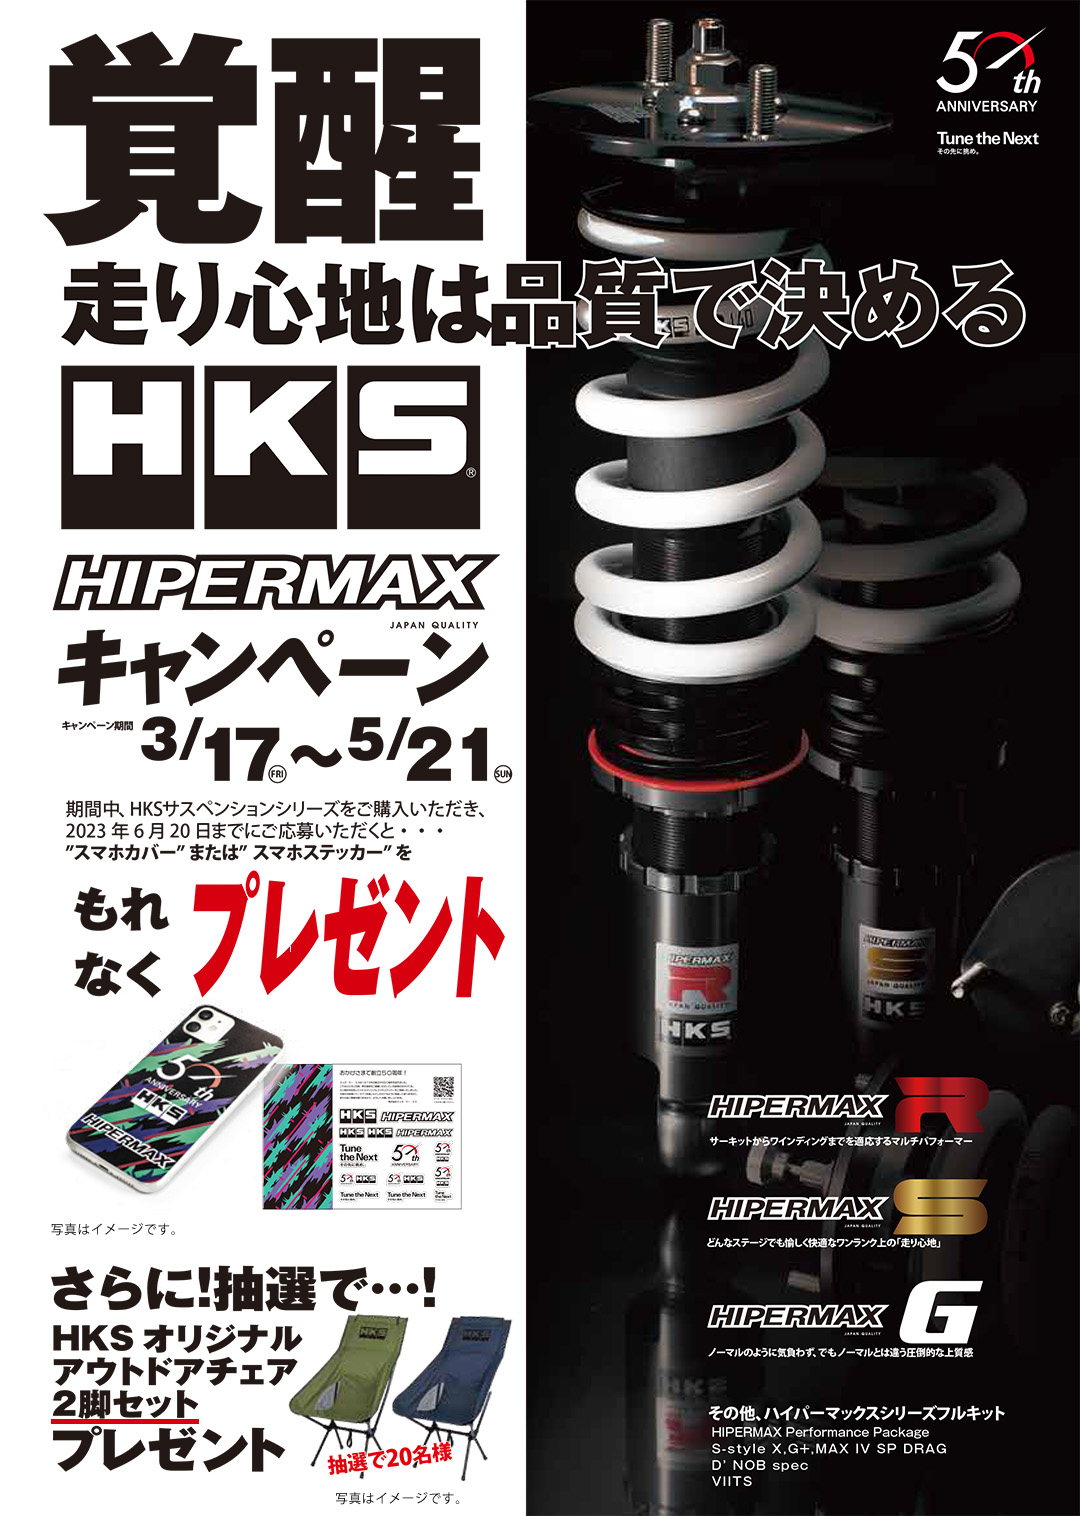 HKS HIPERMAX キャンペーン